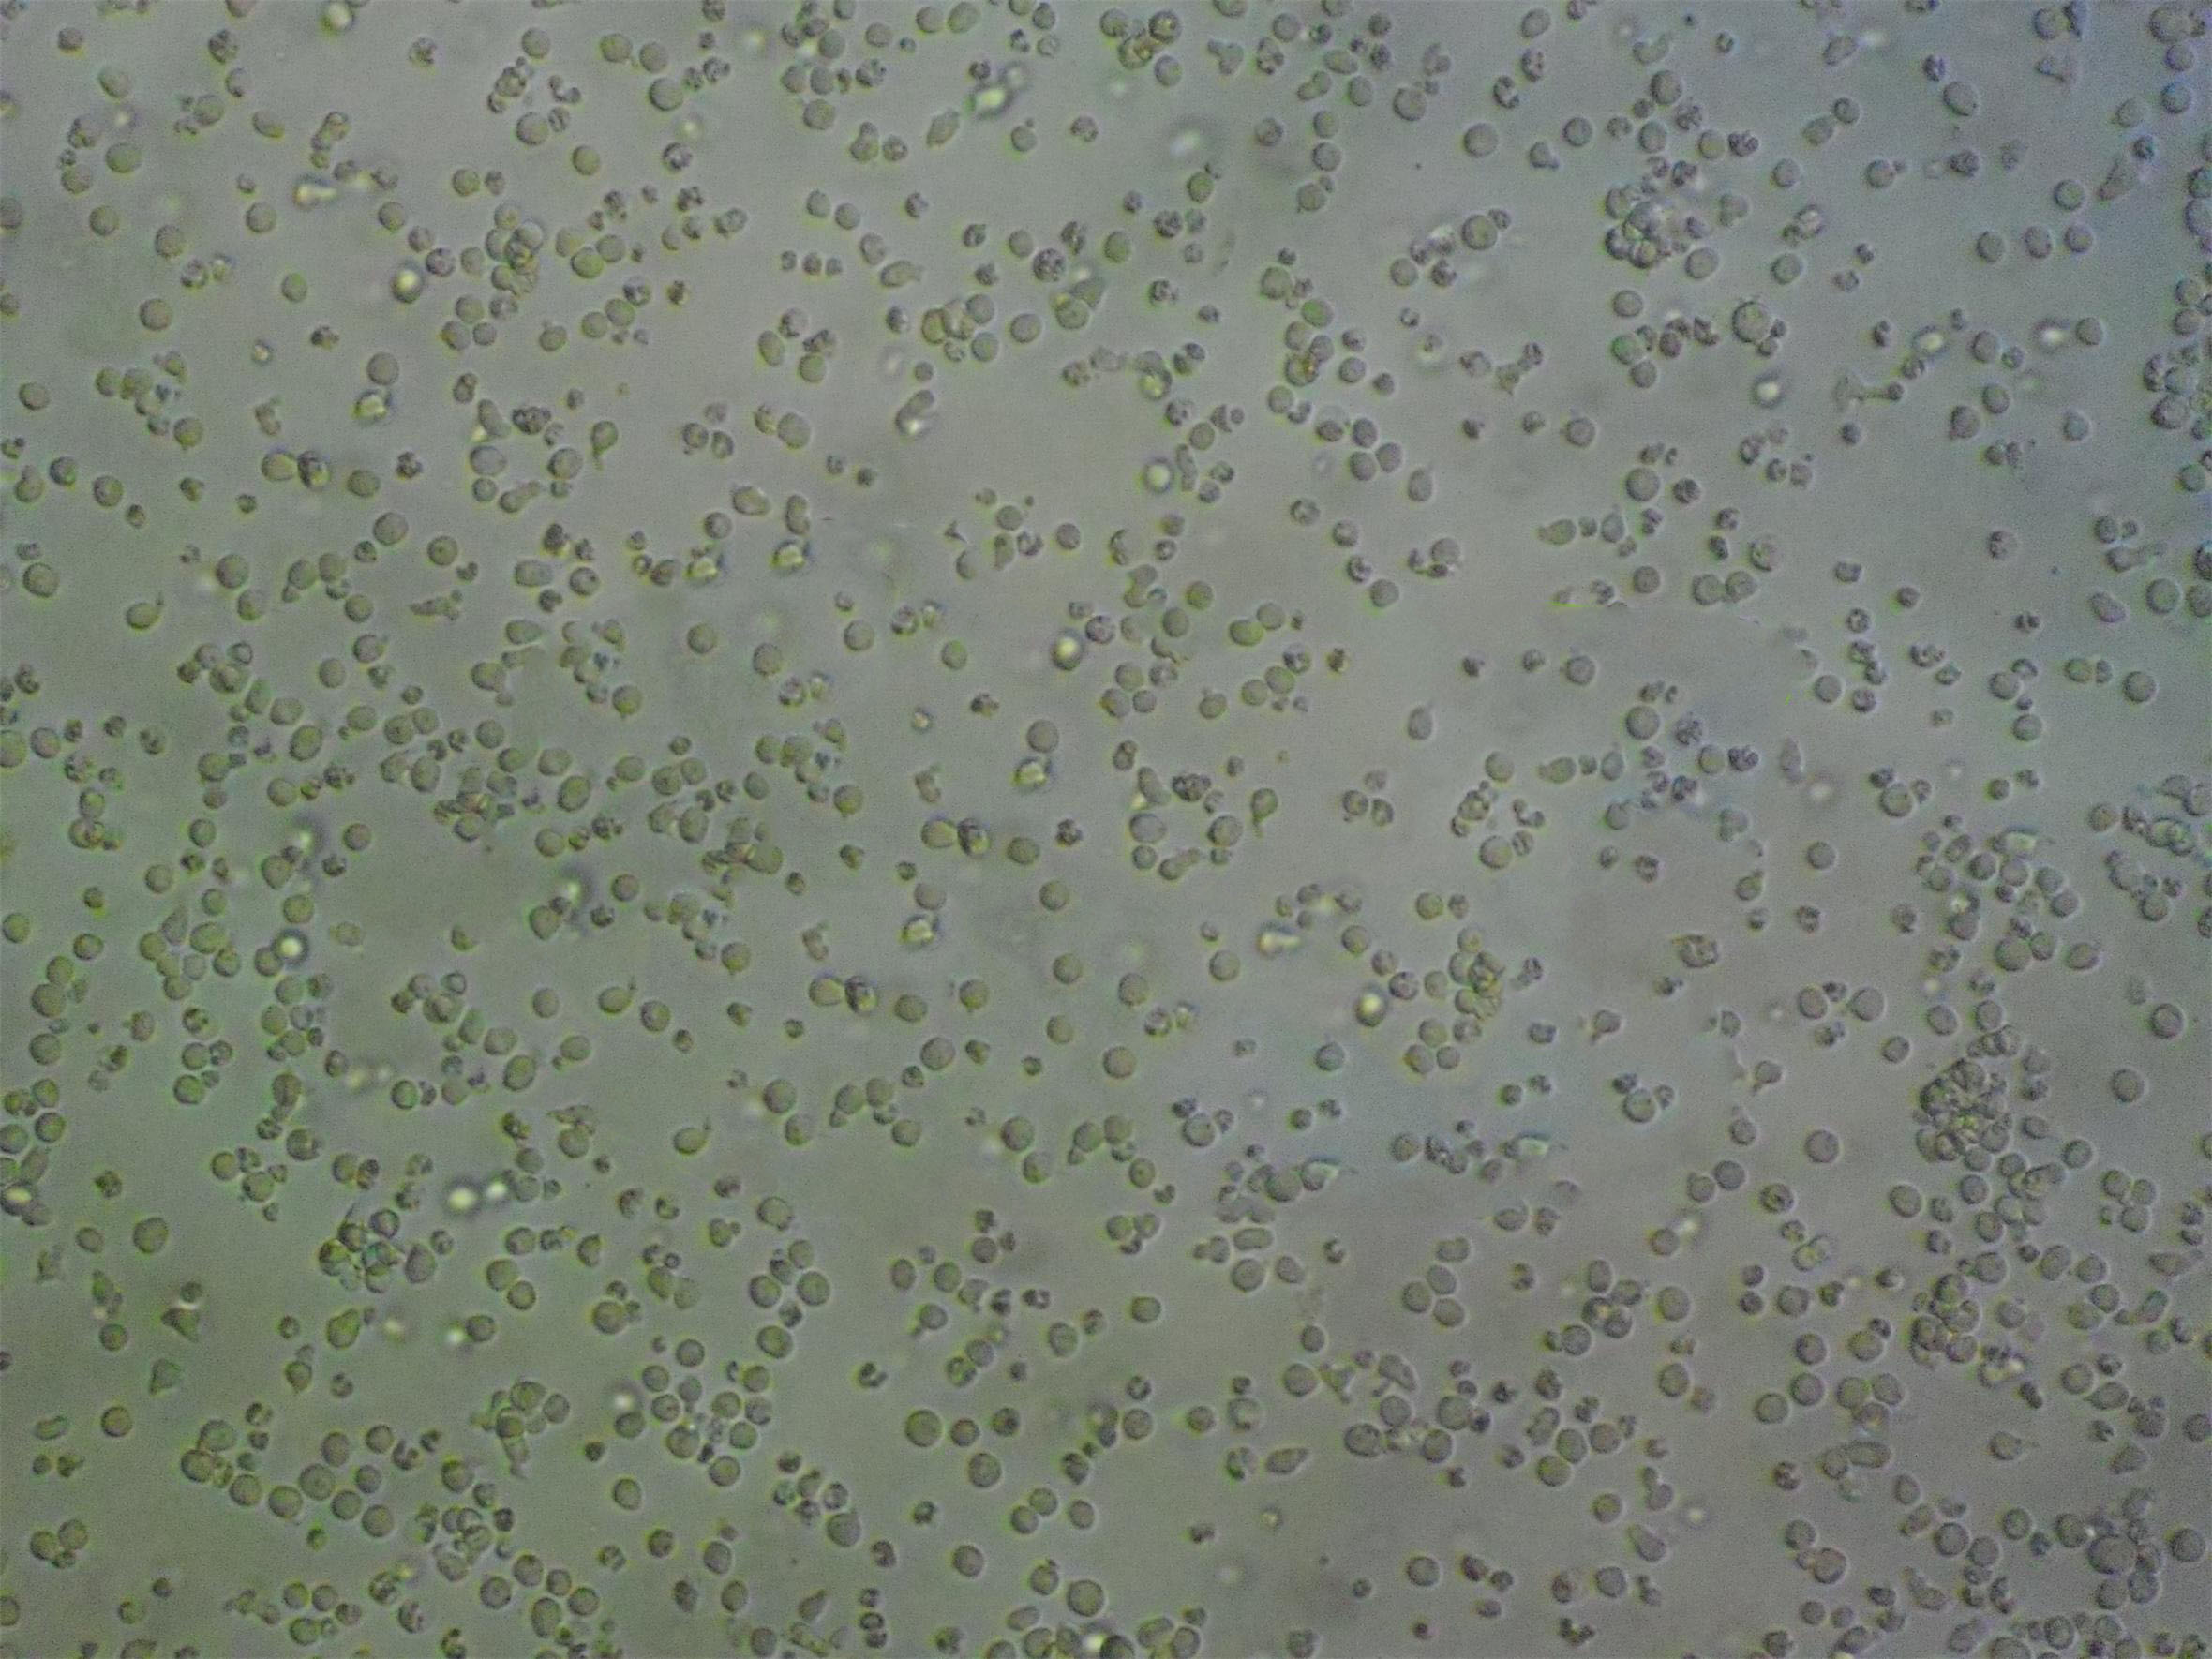 ANA-1 Lymphoblastoid cells小鼠巨噬细胞系,ANA-1 Lymphoblastoid cells